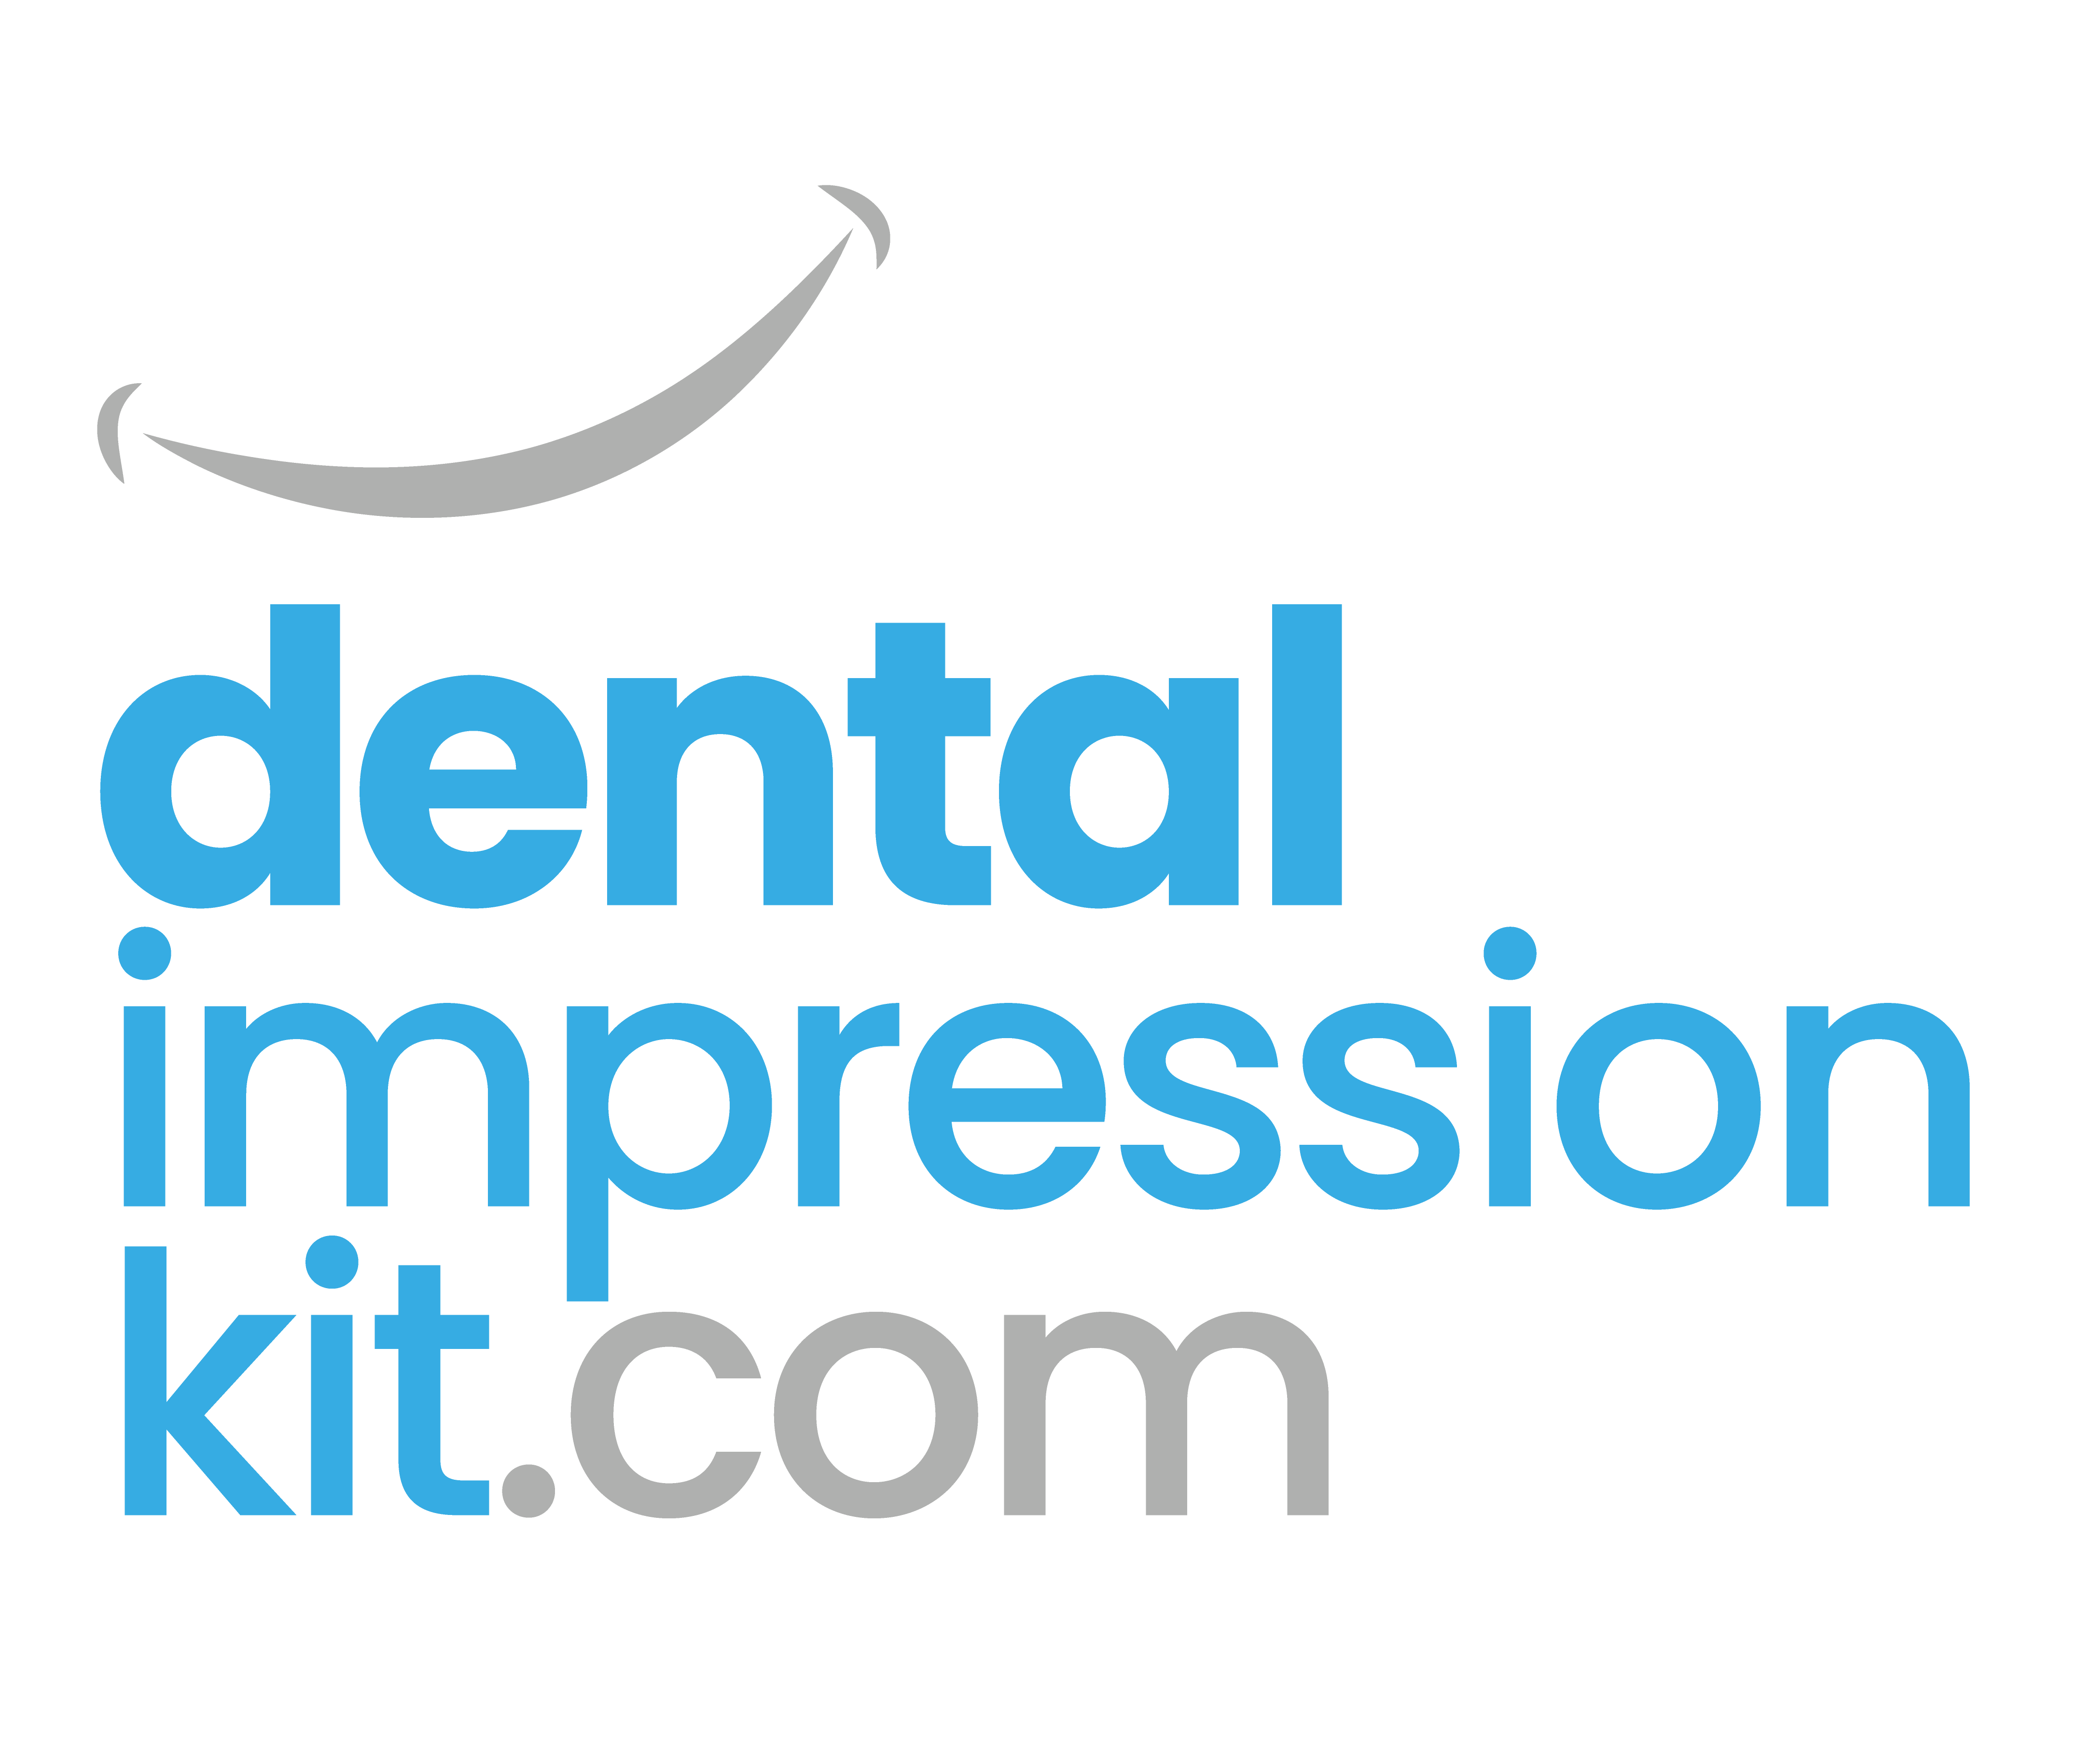 At Home Dental Molding Kit And Instructions - Single Kit